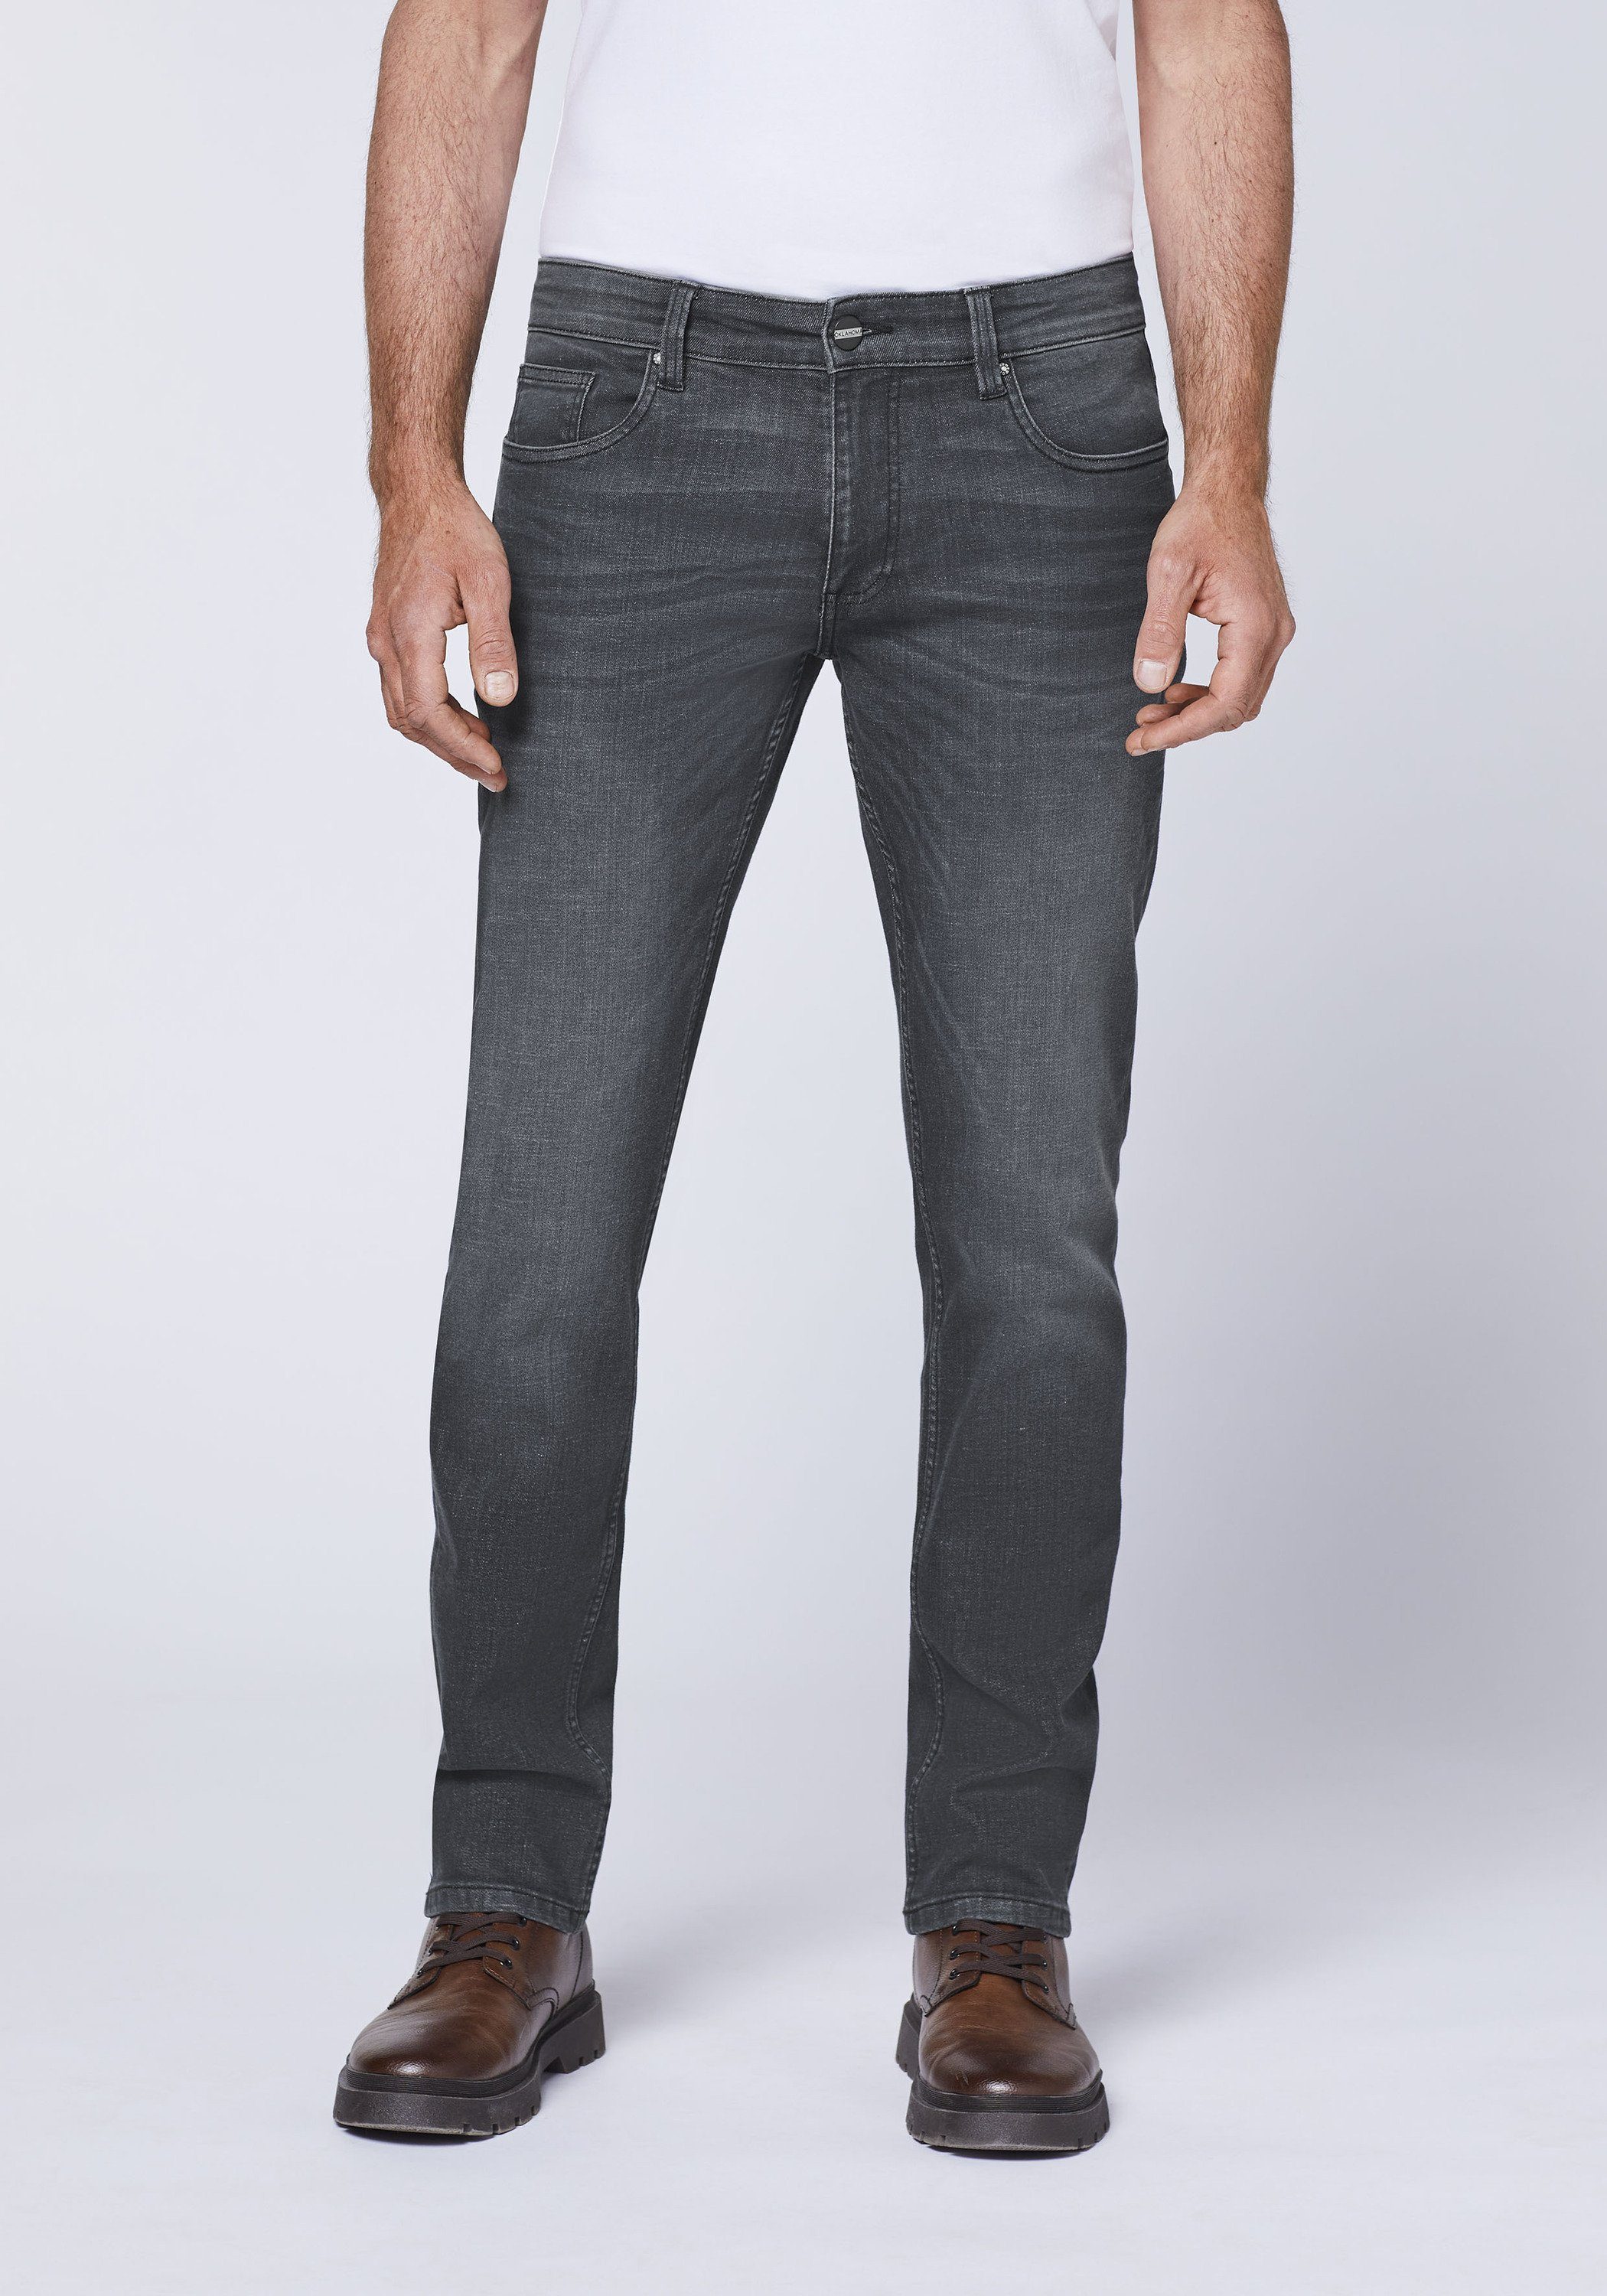 Jeans Slim-fit-Jeans Waschung Oklahoma mit dezenter